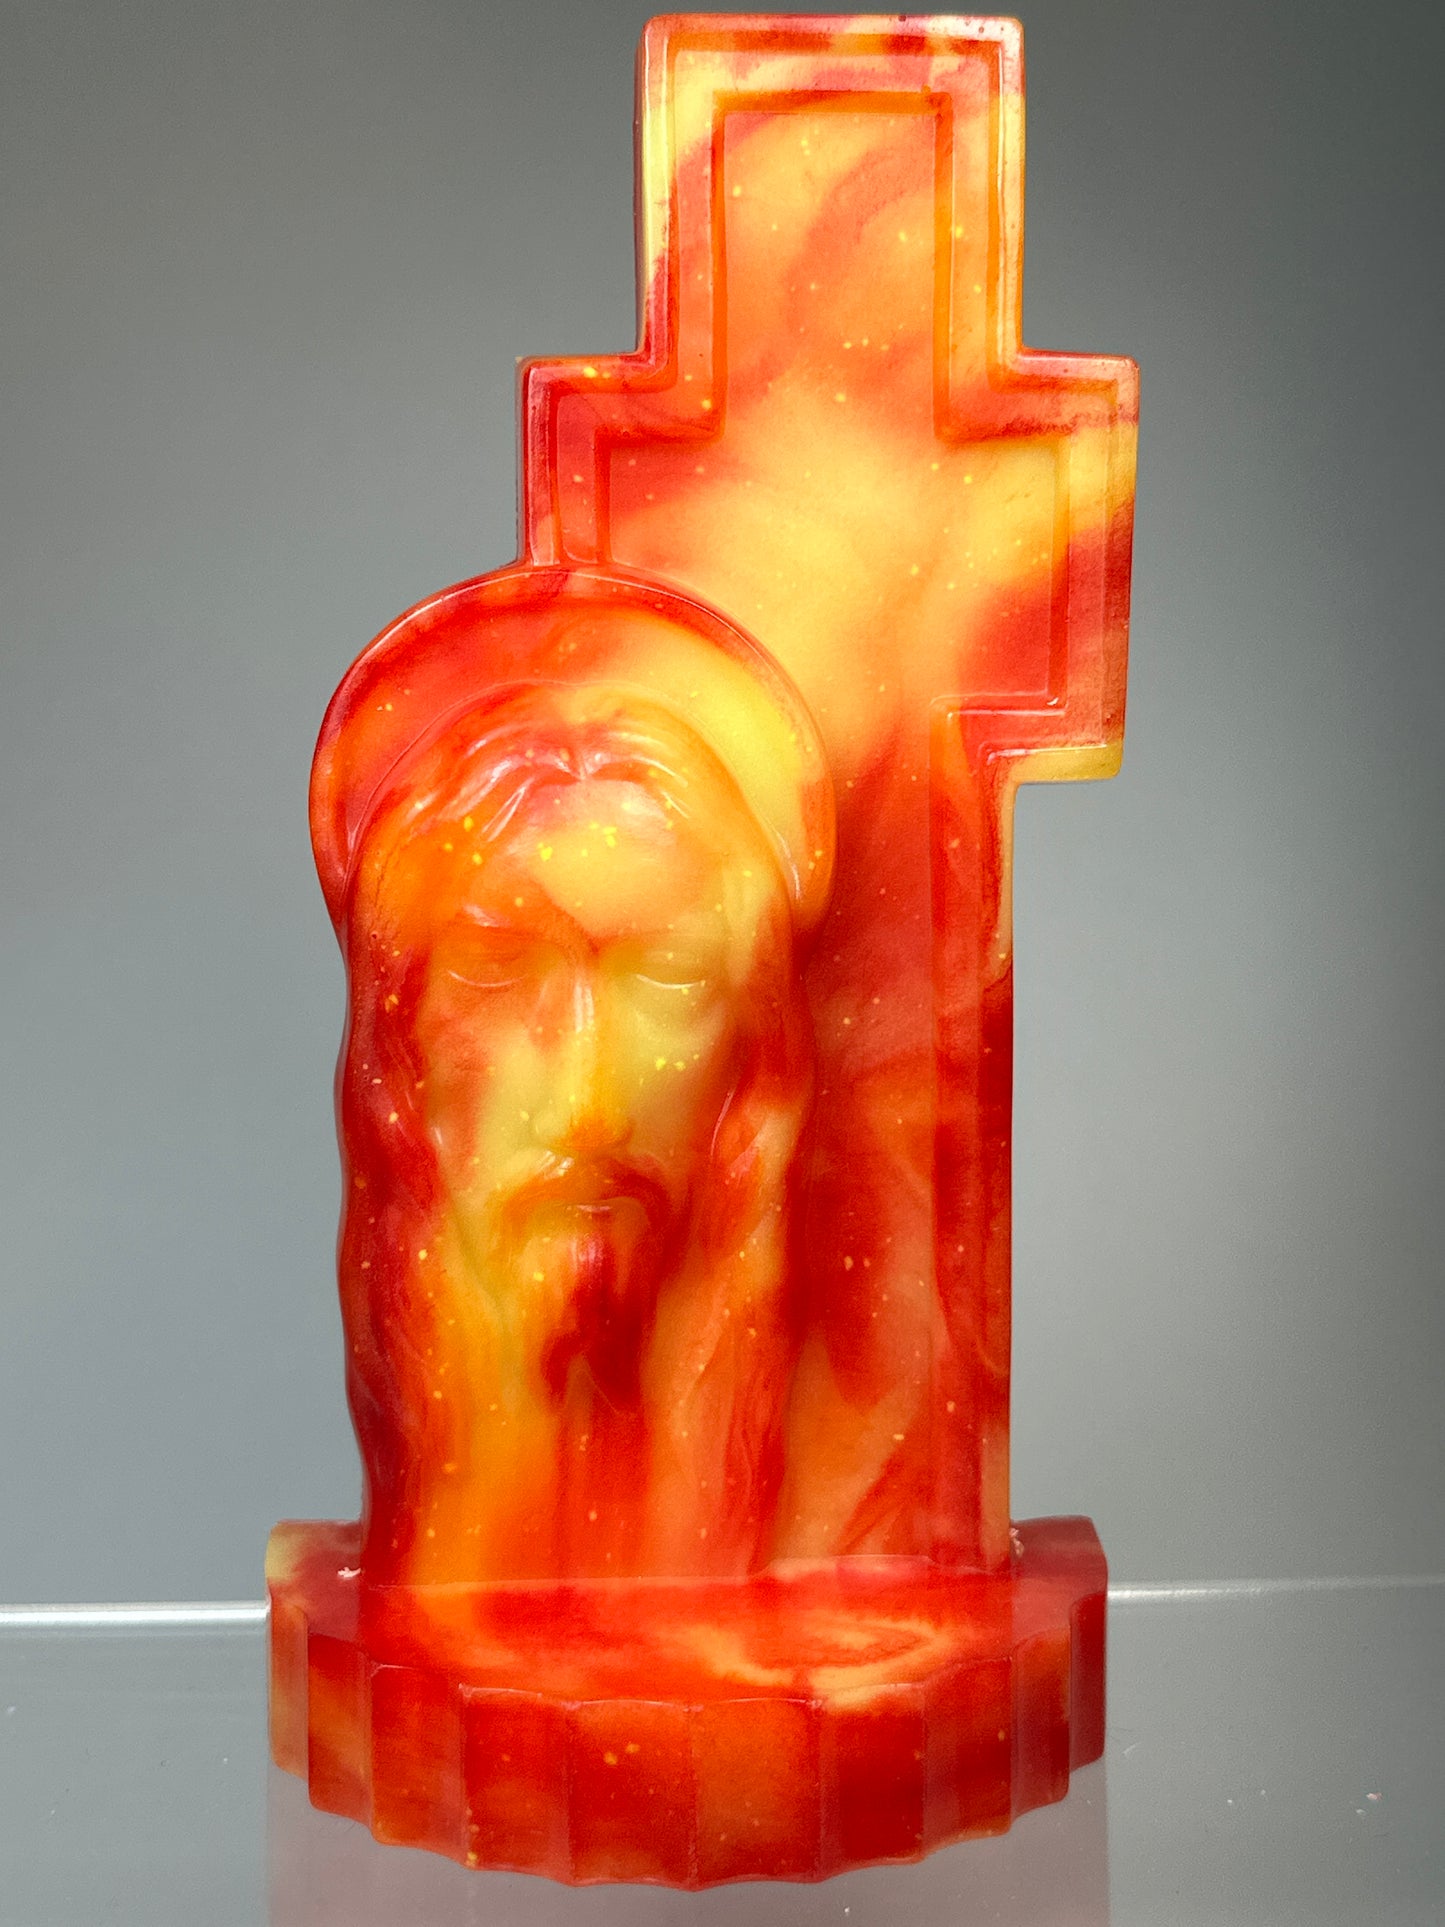 Sad Jesus: Marbled Orange/Yellow Glow in the Dark